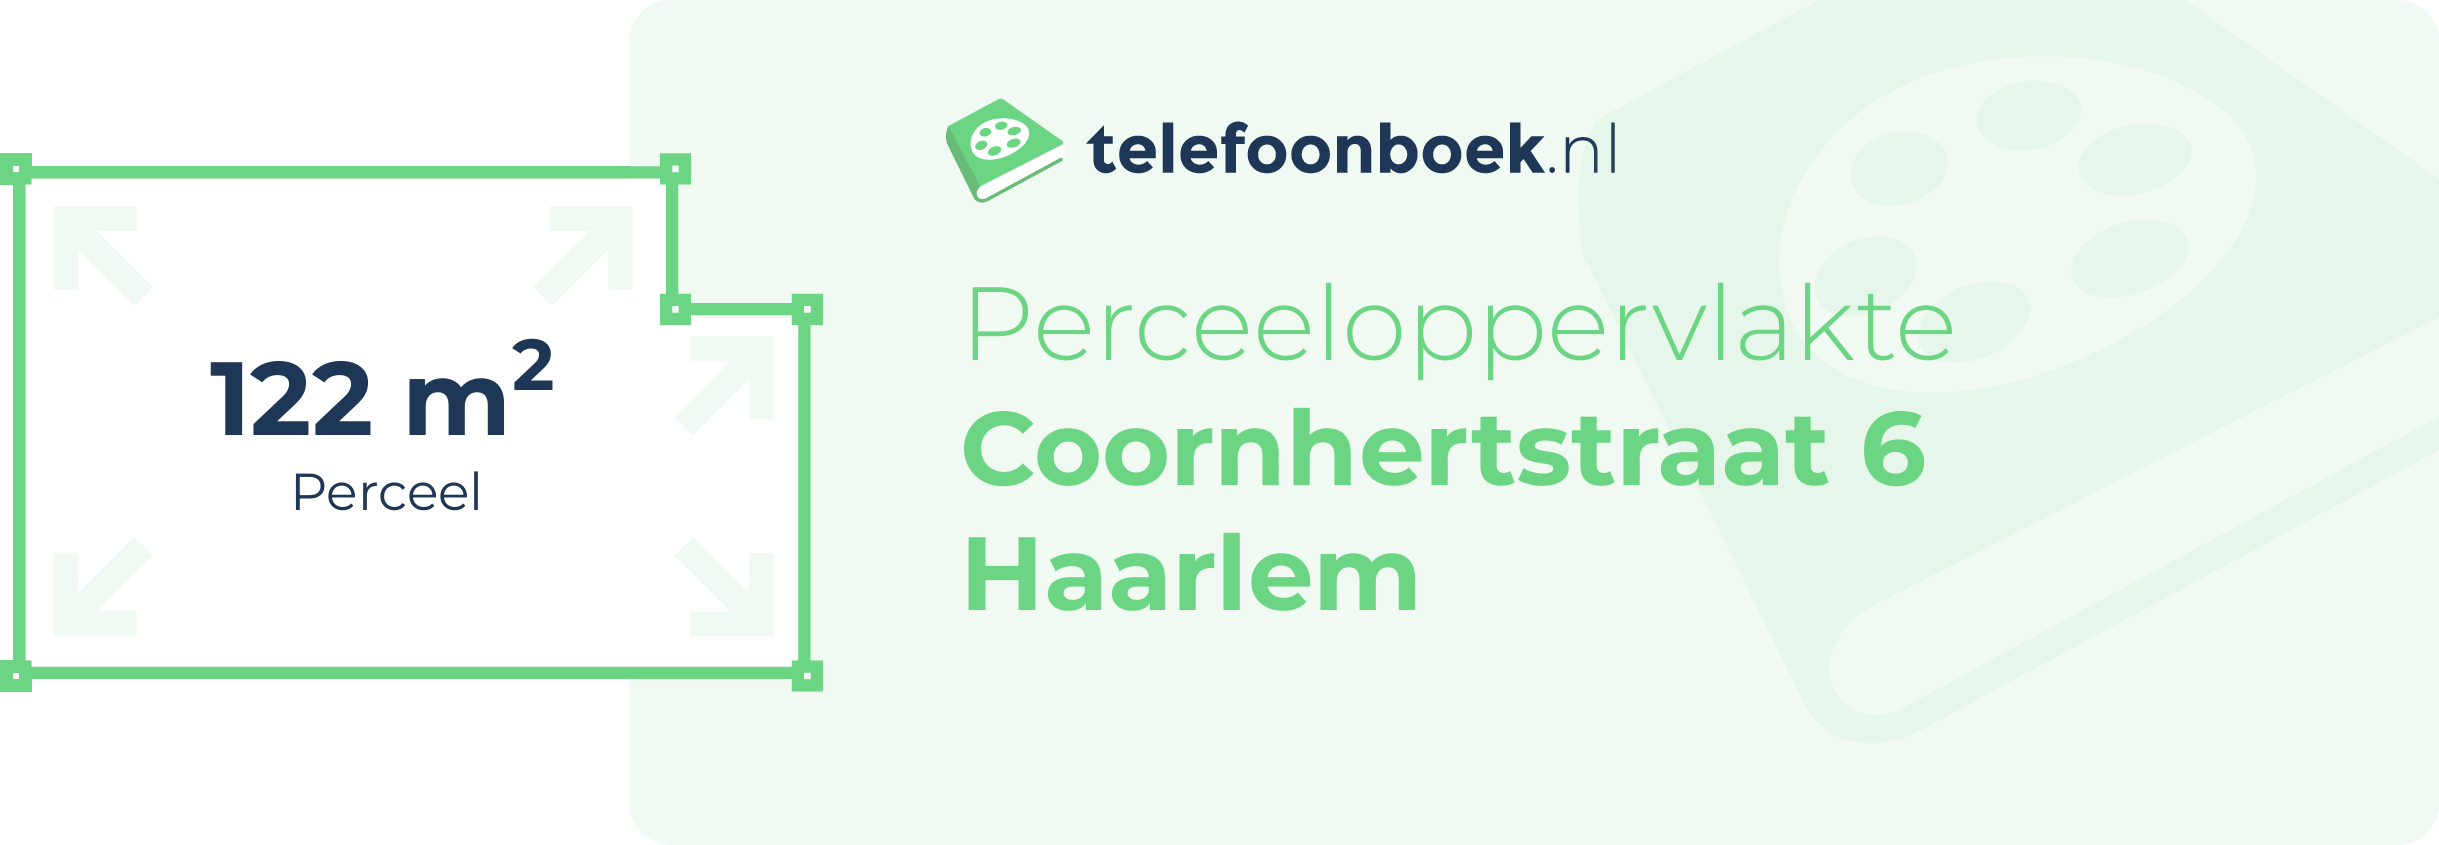 Perceeloppervlakte Coornhertstraat 6 Haarlem